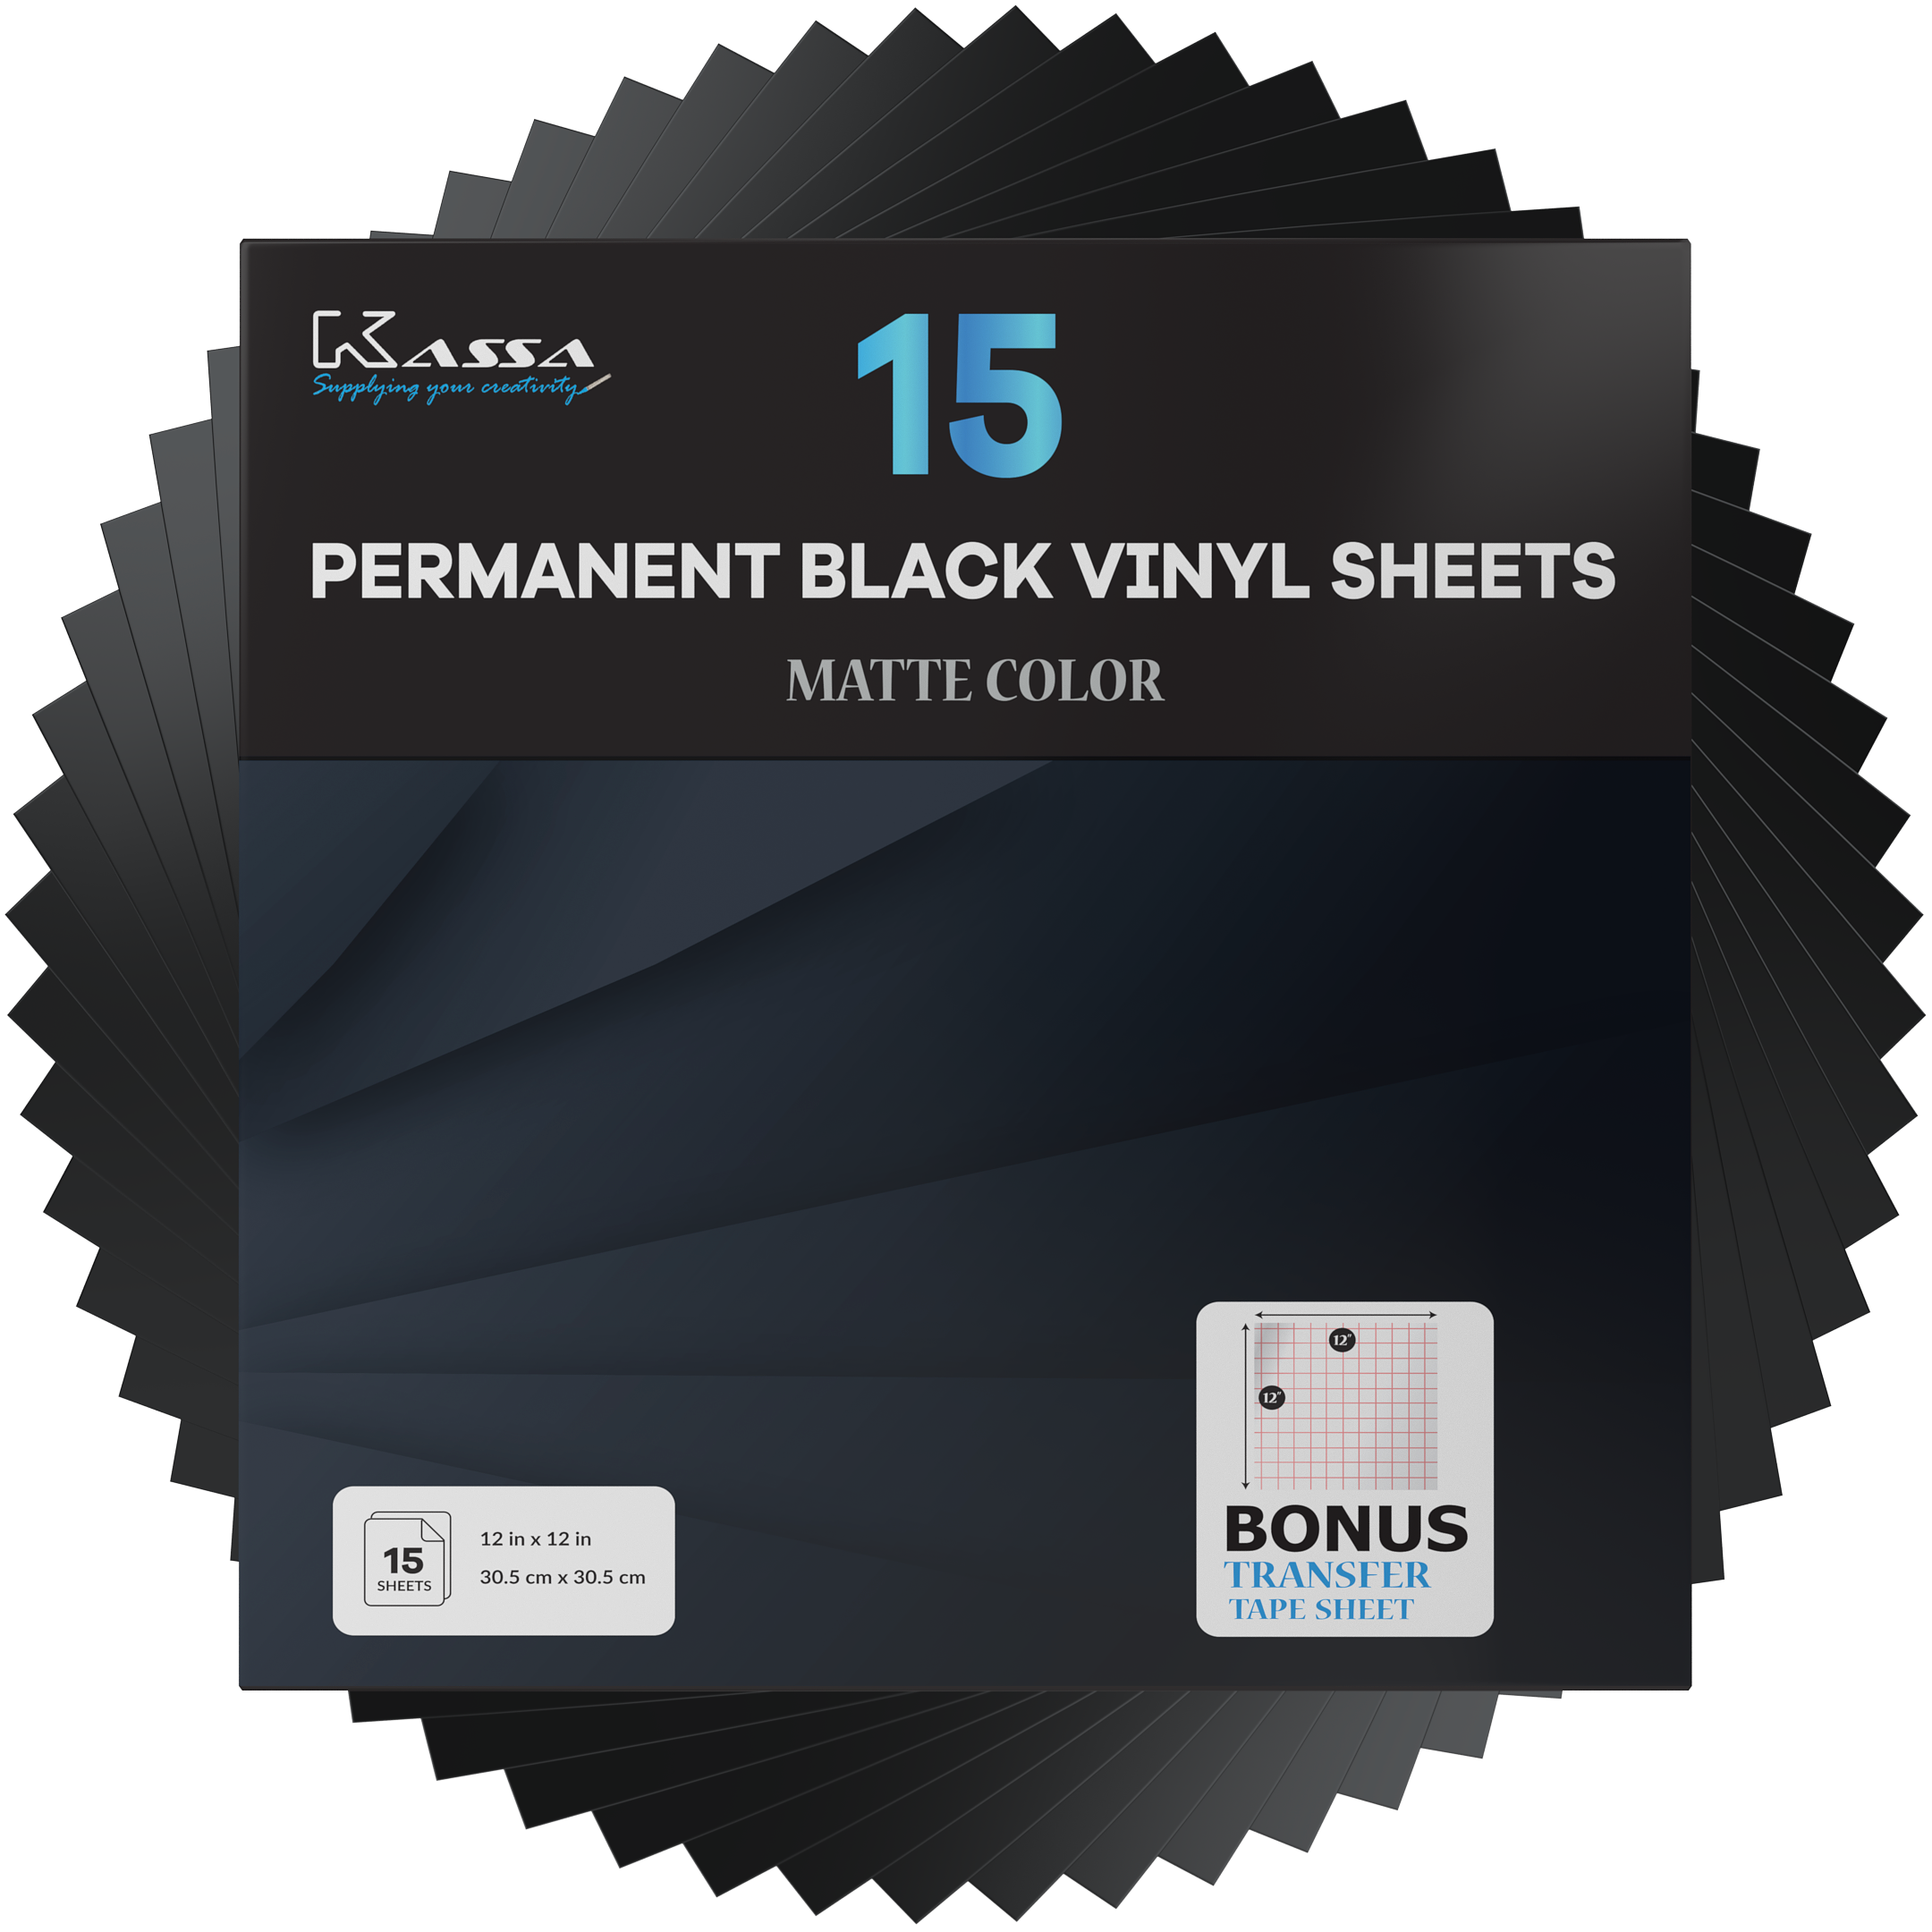 Kassa Permanent Black Vinyl Sheets (15 Pack, 12” x 12”) - Includes